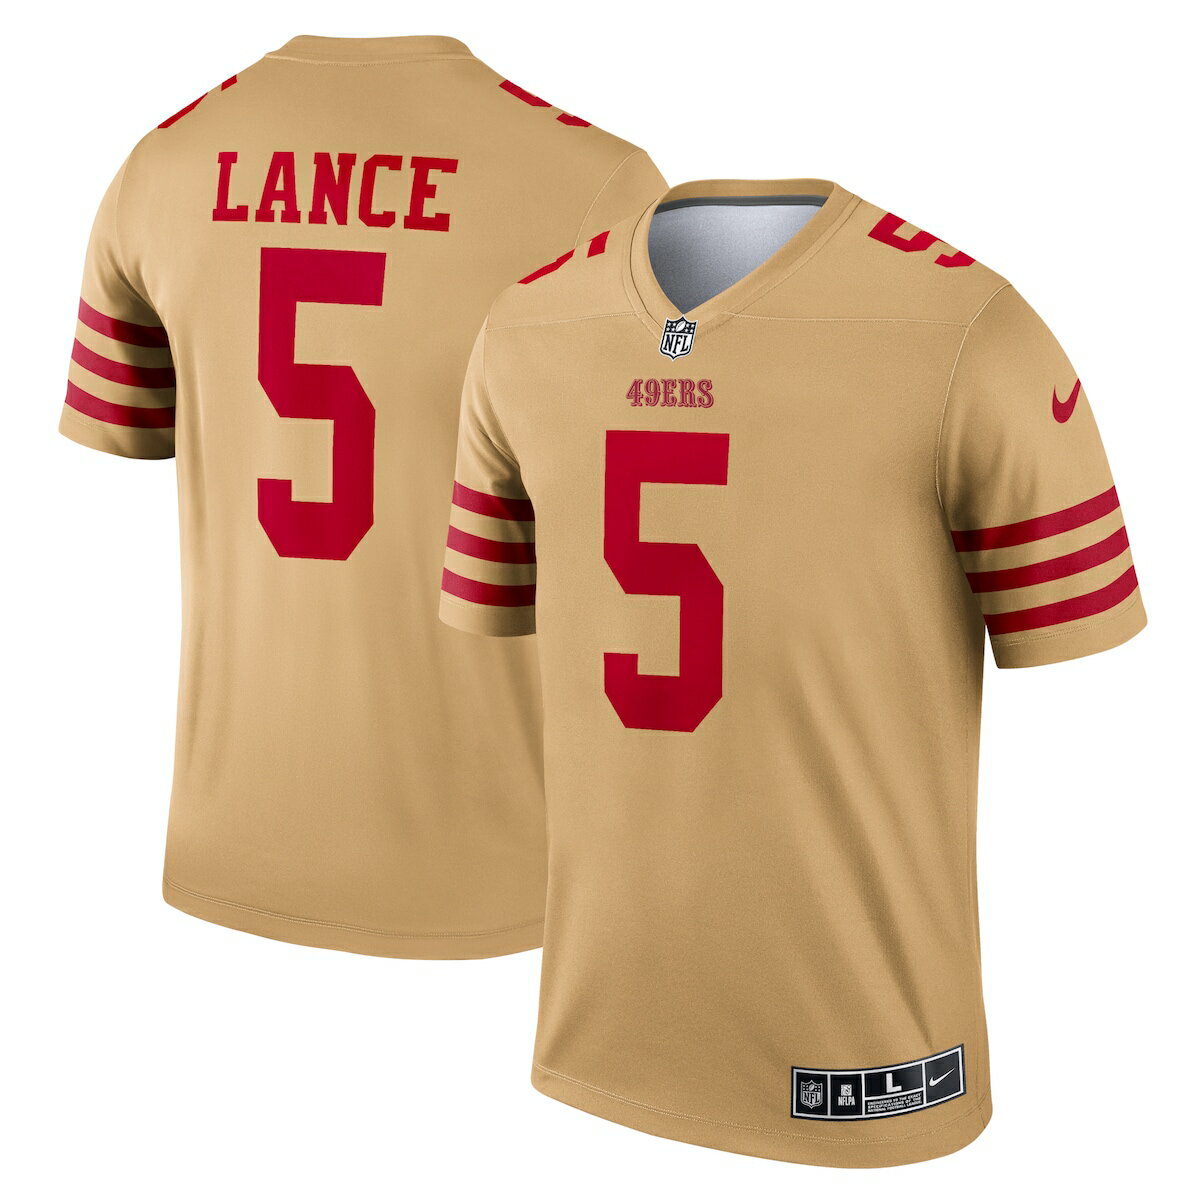 NFL 49ers トレイ・ランス ユニフォーム Nike ナイキ メンズ ゴールド (Men's Nike Inverted Legend Jersey)